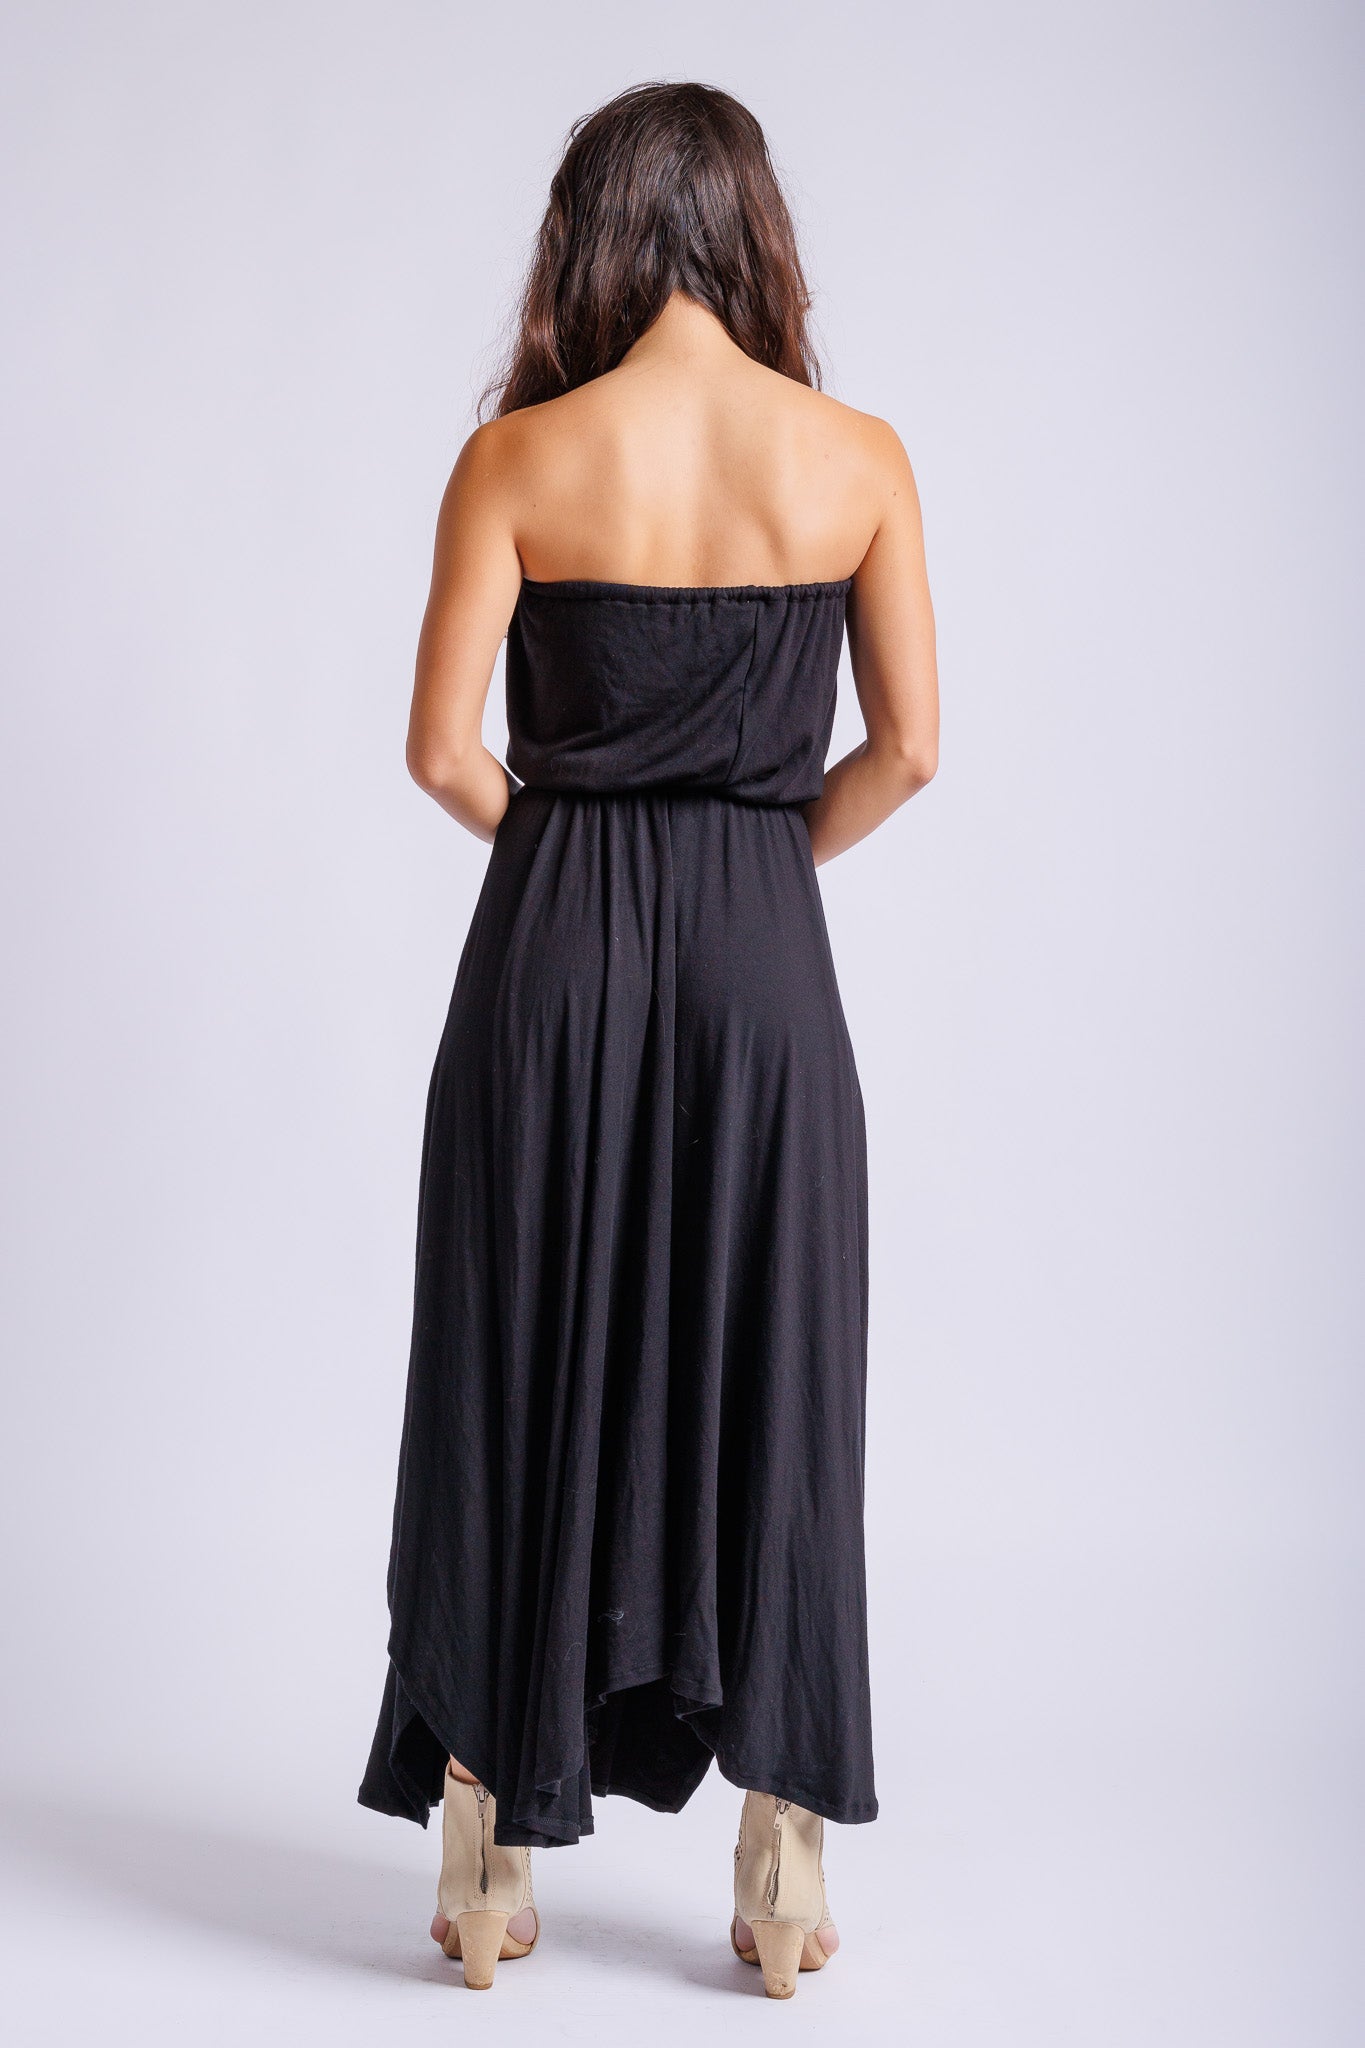 Strapless Dress Black Maxi